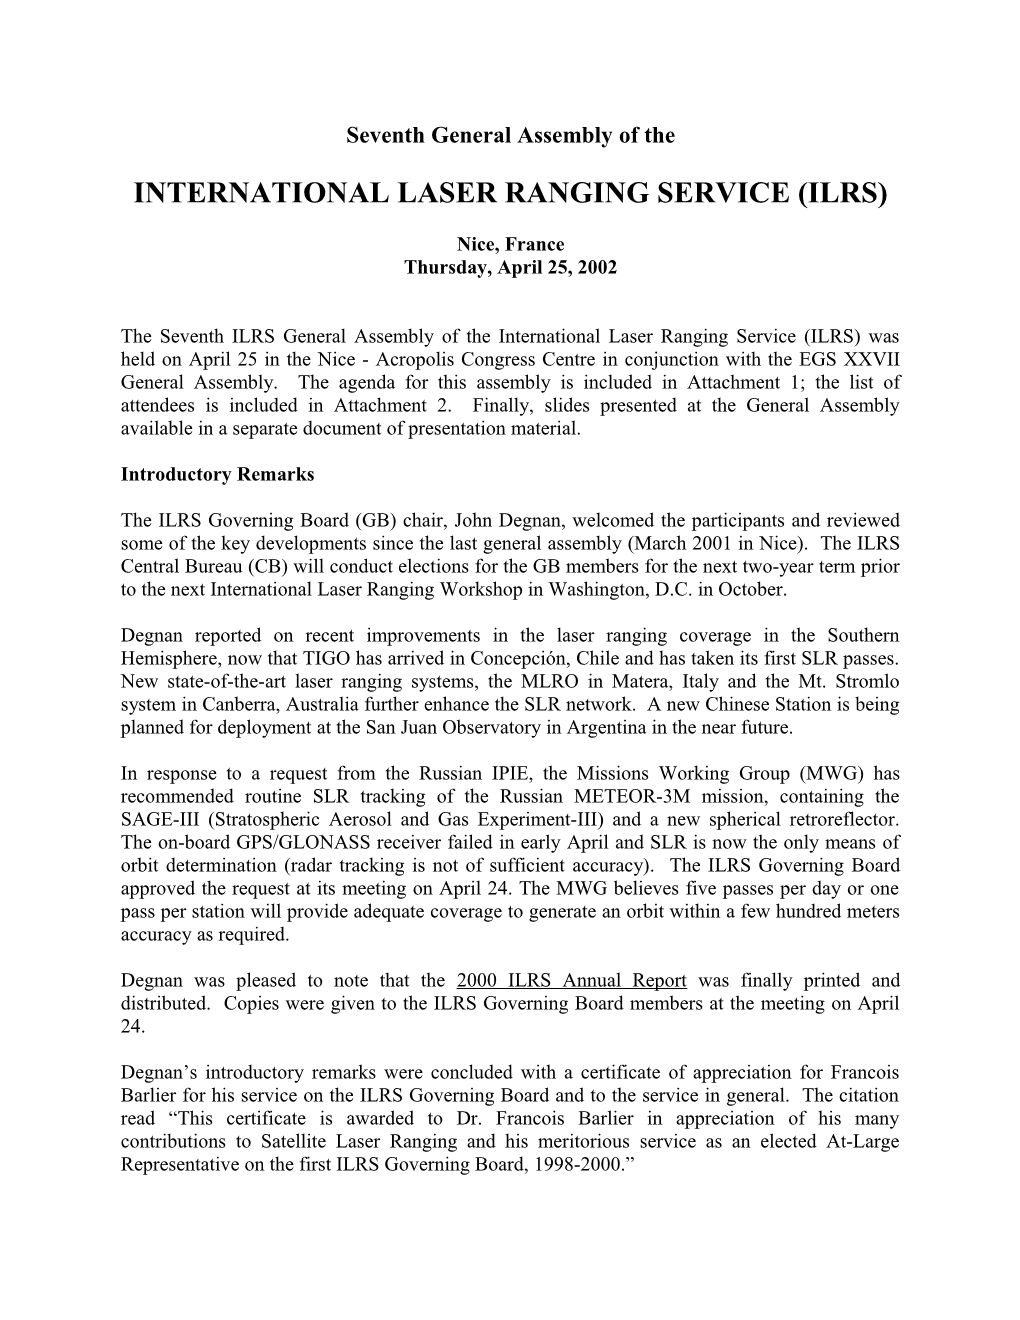 International Laser Ranging Service (ILRS)